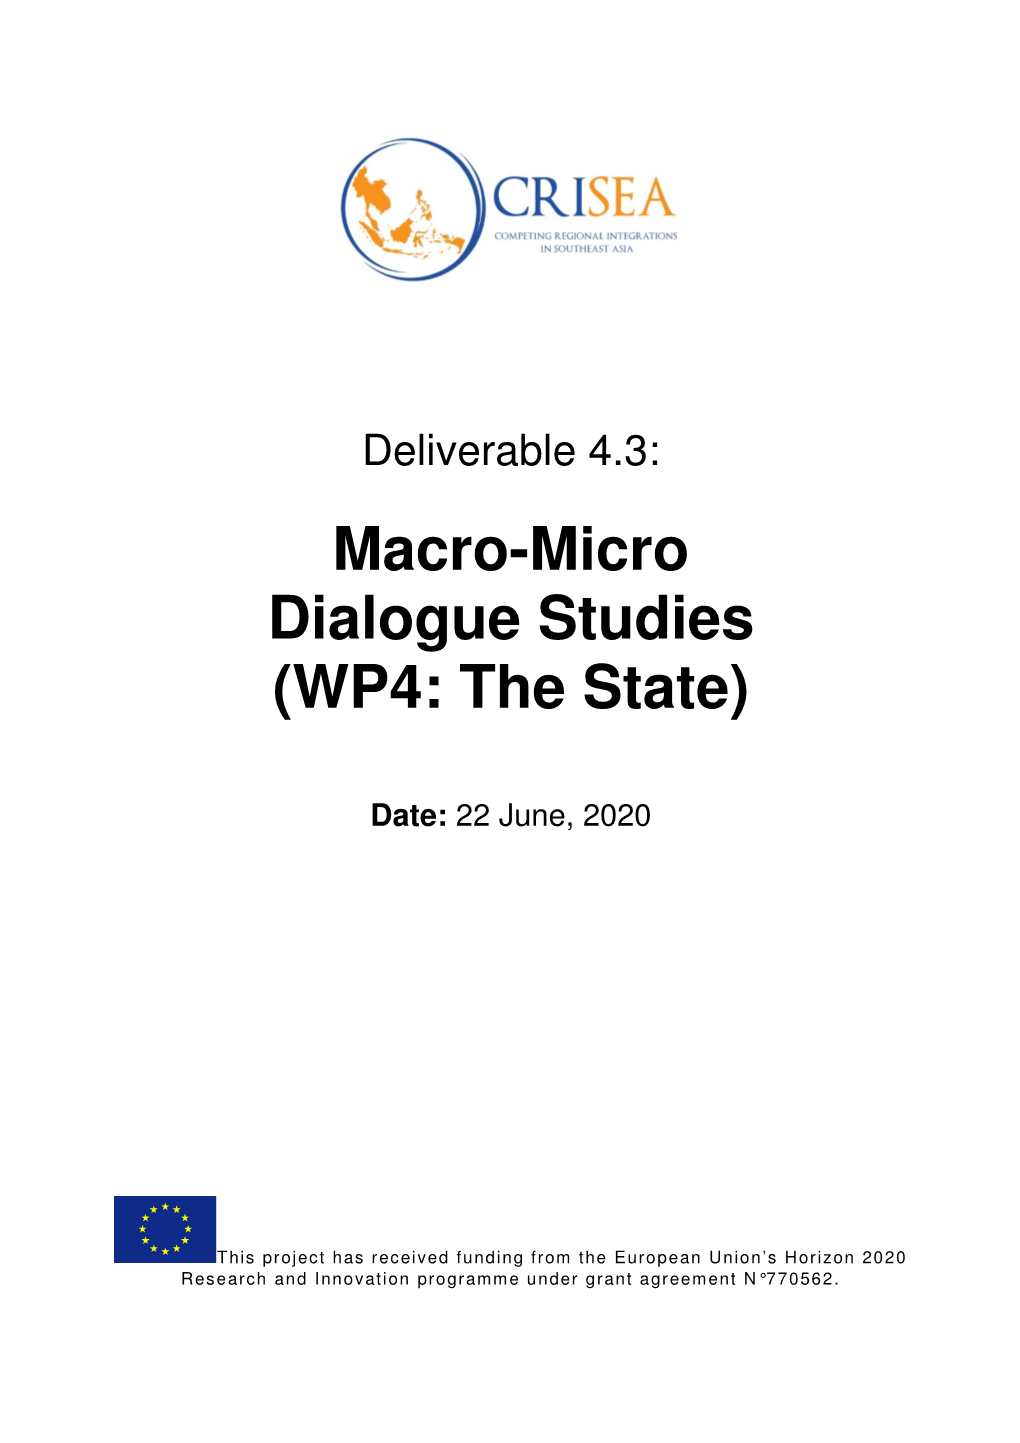 Macro-Micro Dialogue Studies (WP4: the State)